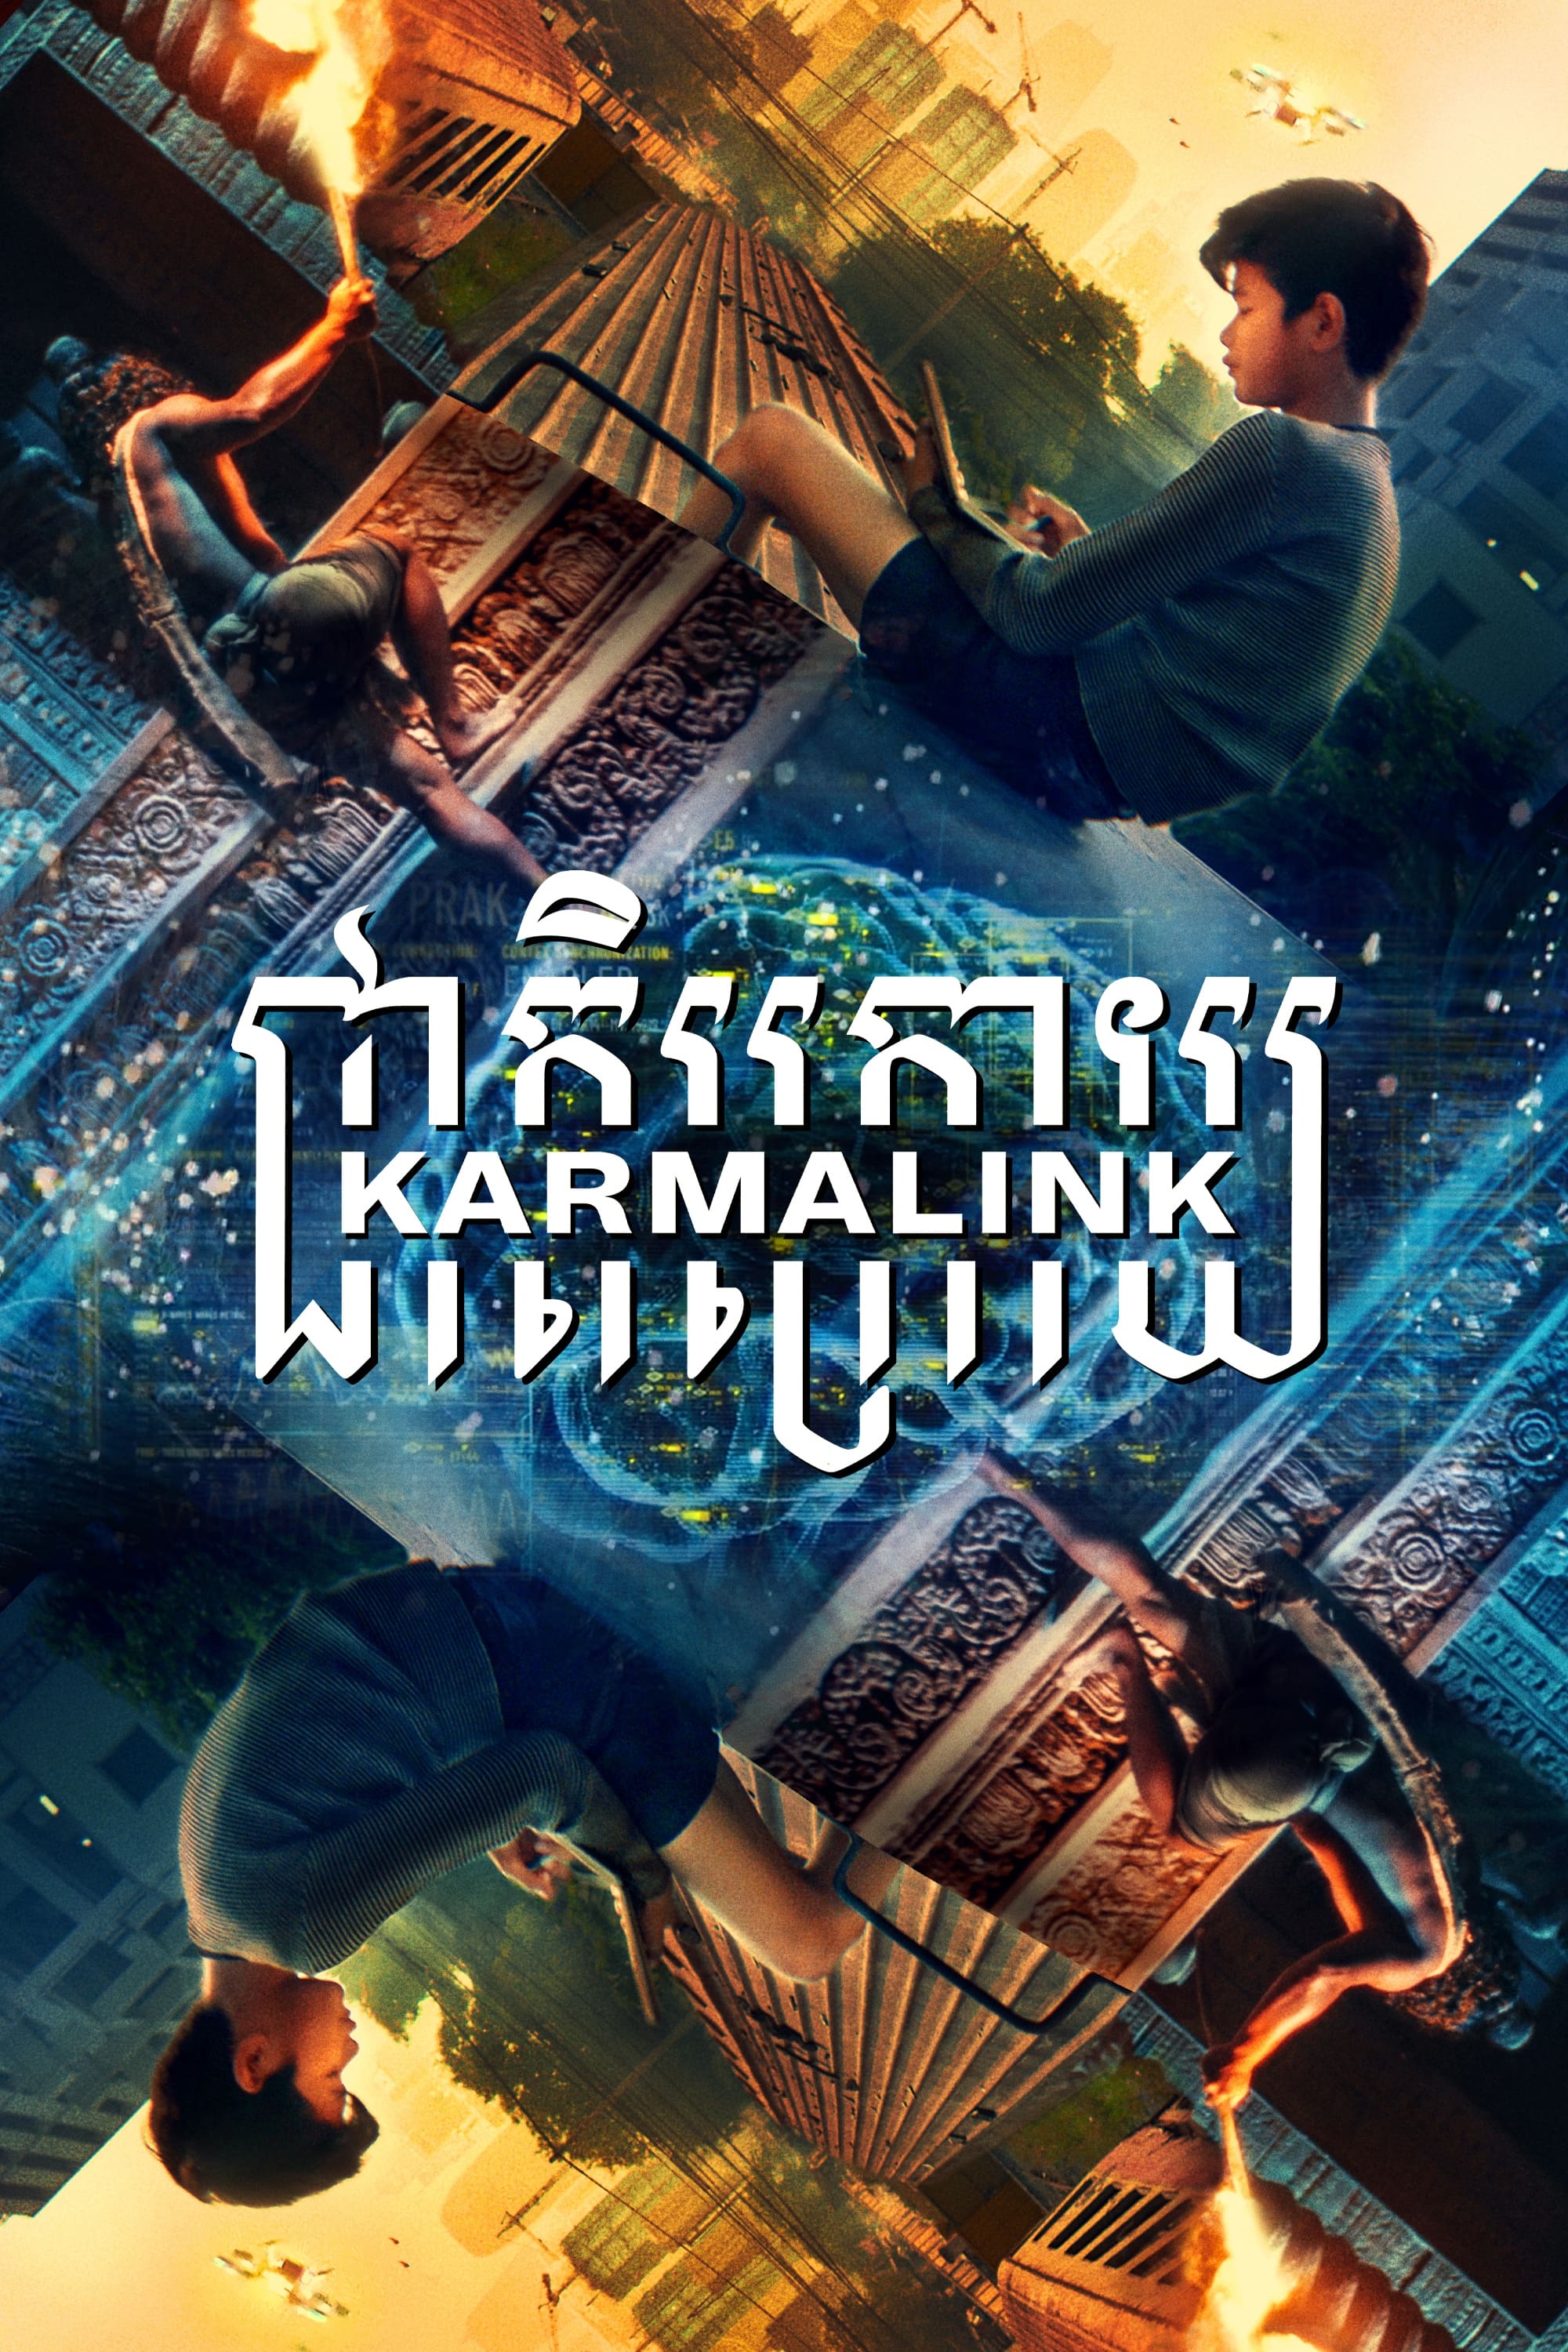 Karmalink (2022) poster - Allmovieland.com